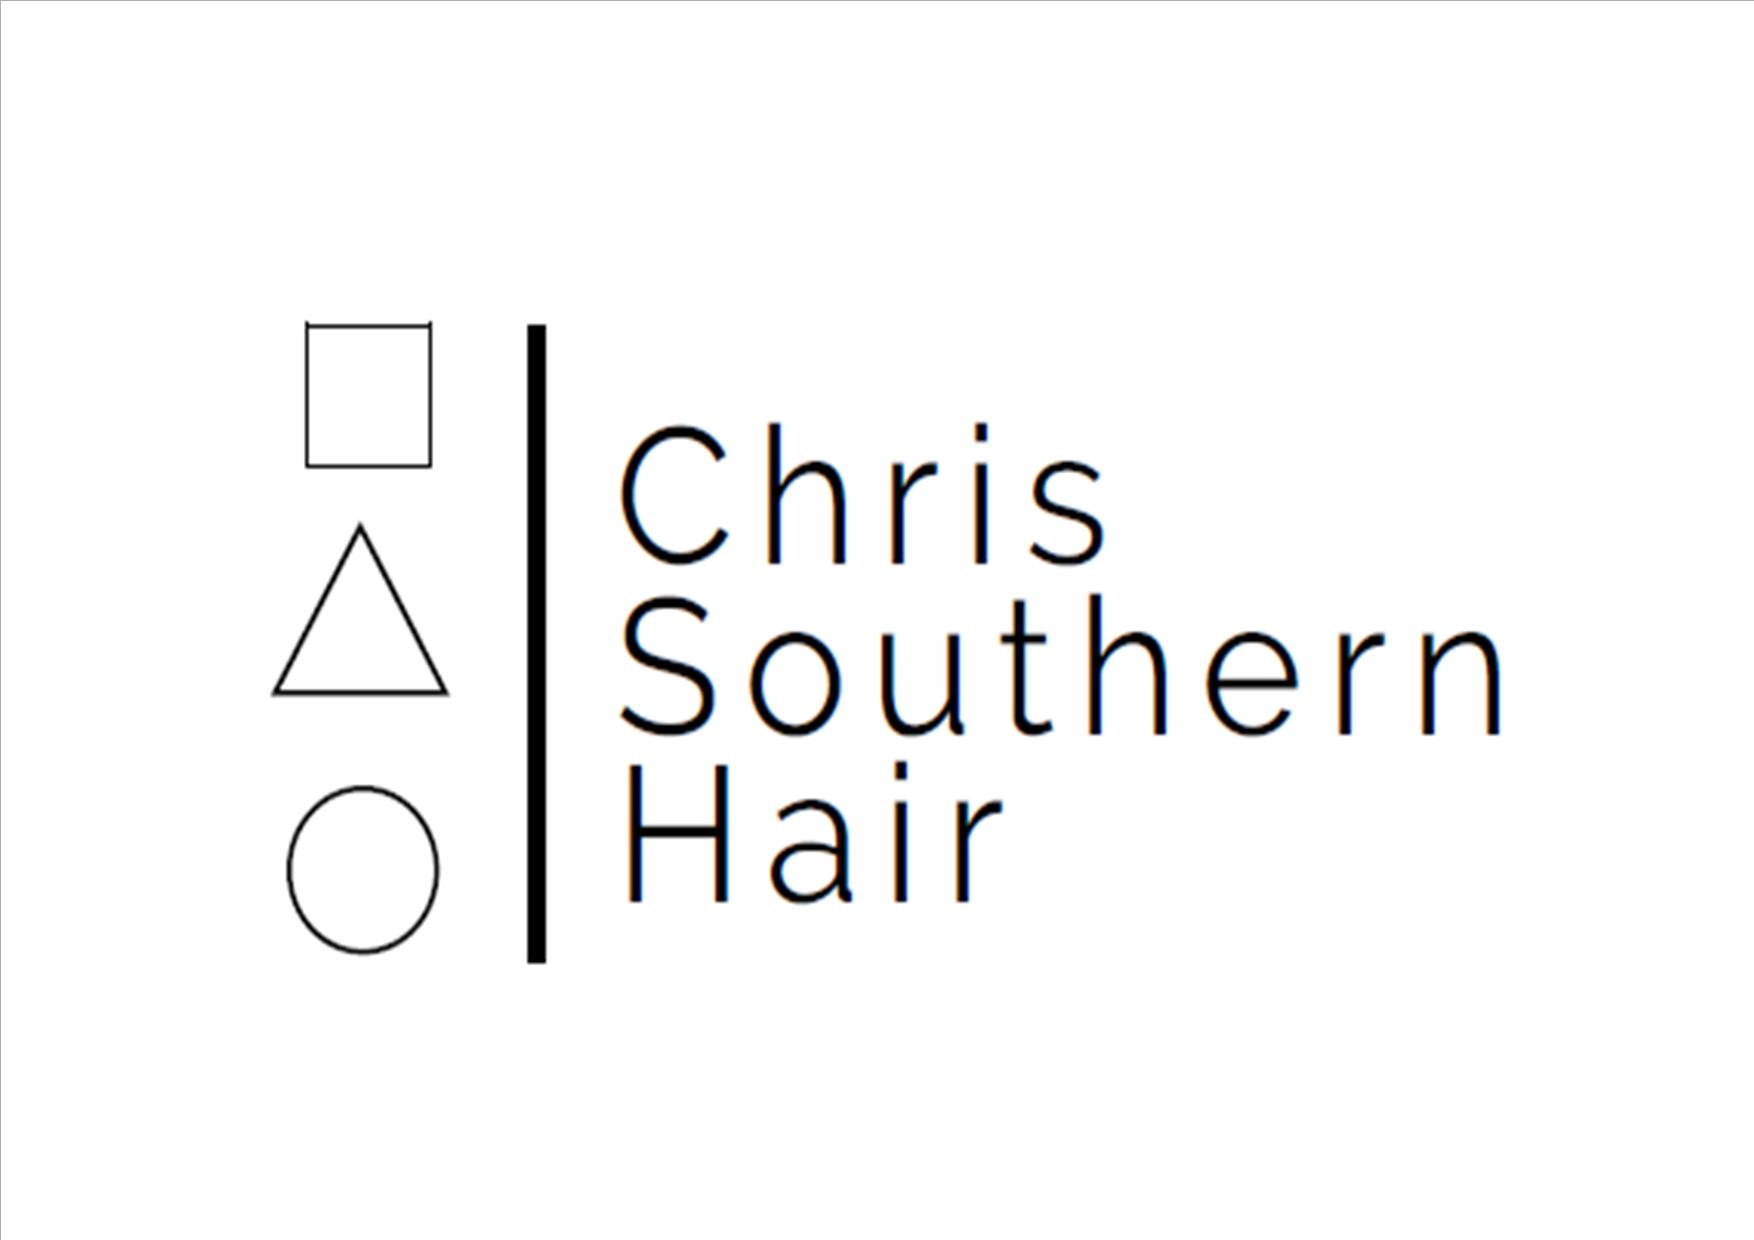 Chris Southern Hair logo